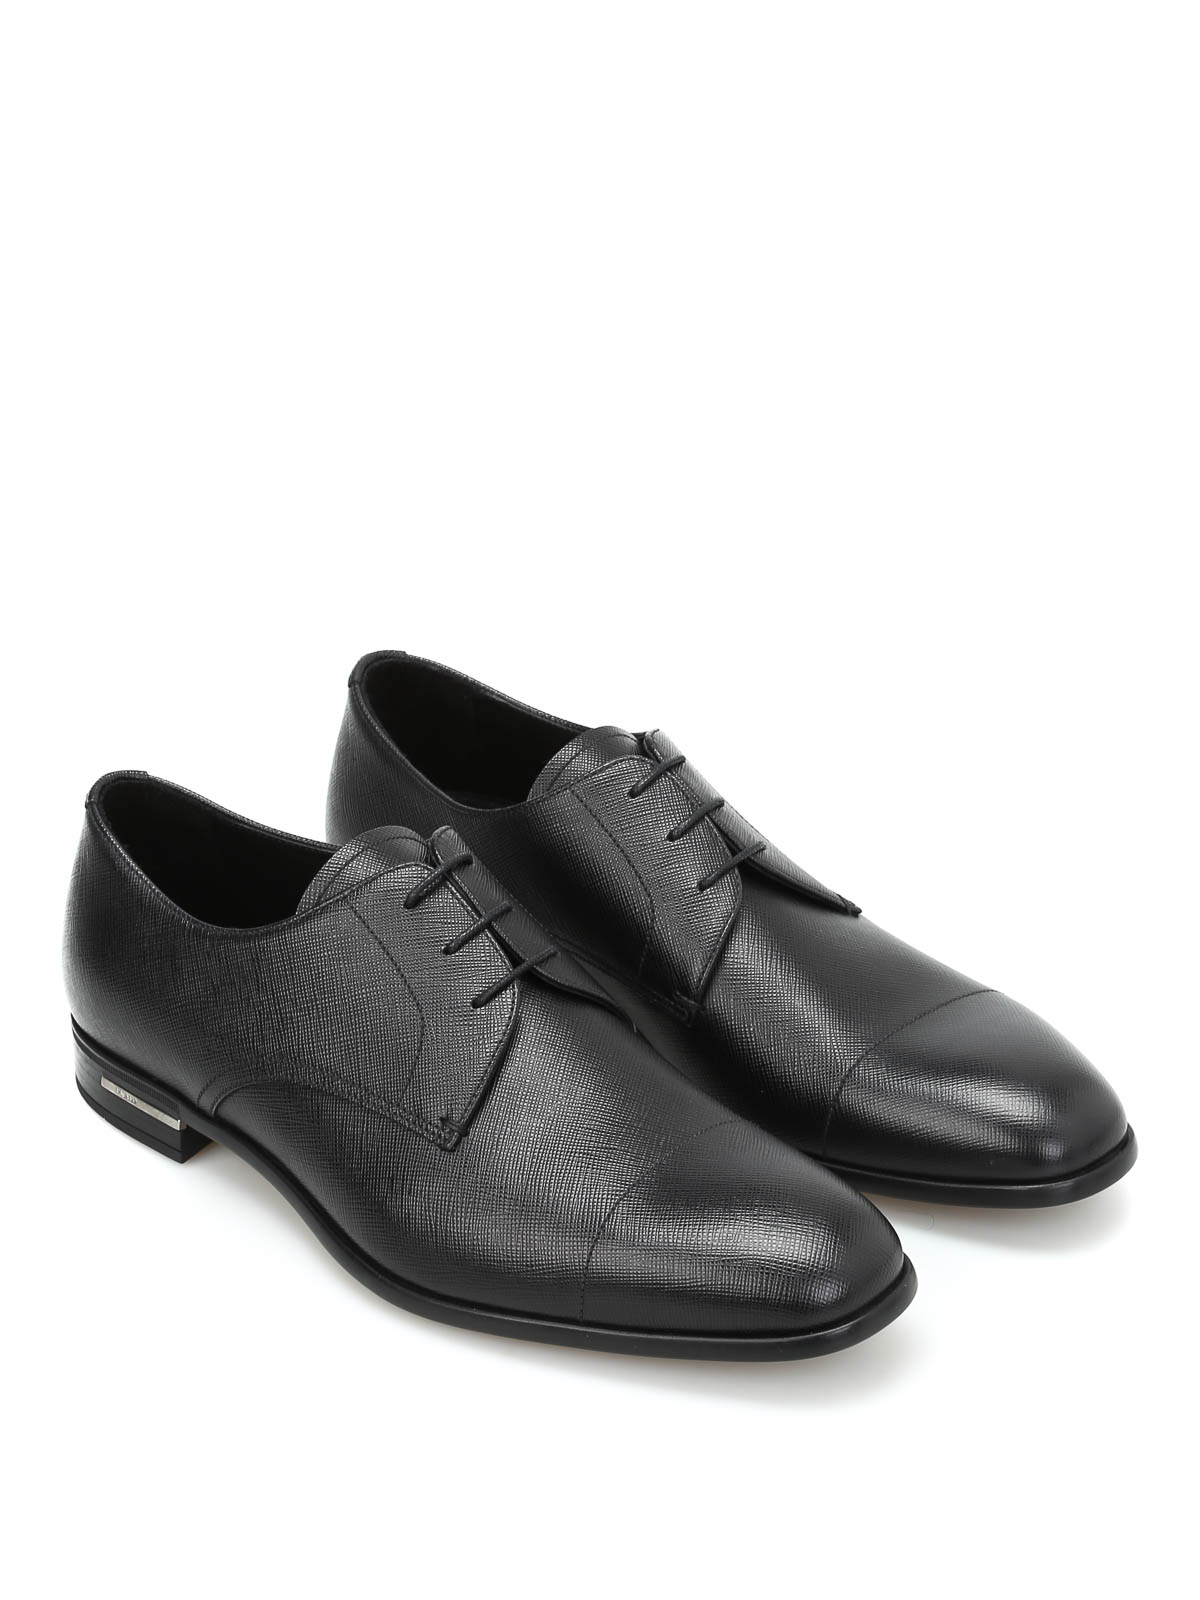 Prada - Saffiano leather Derby shoes 